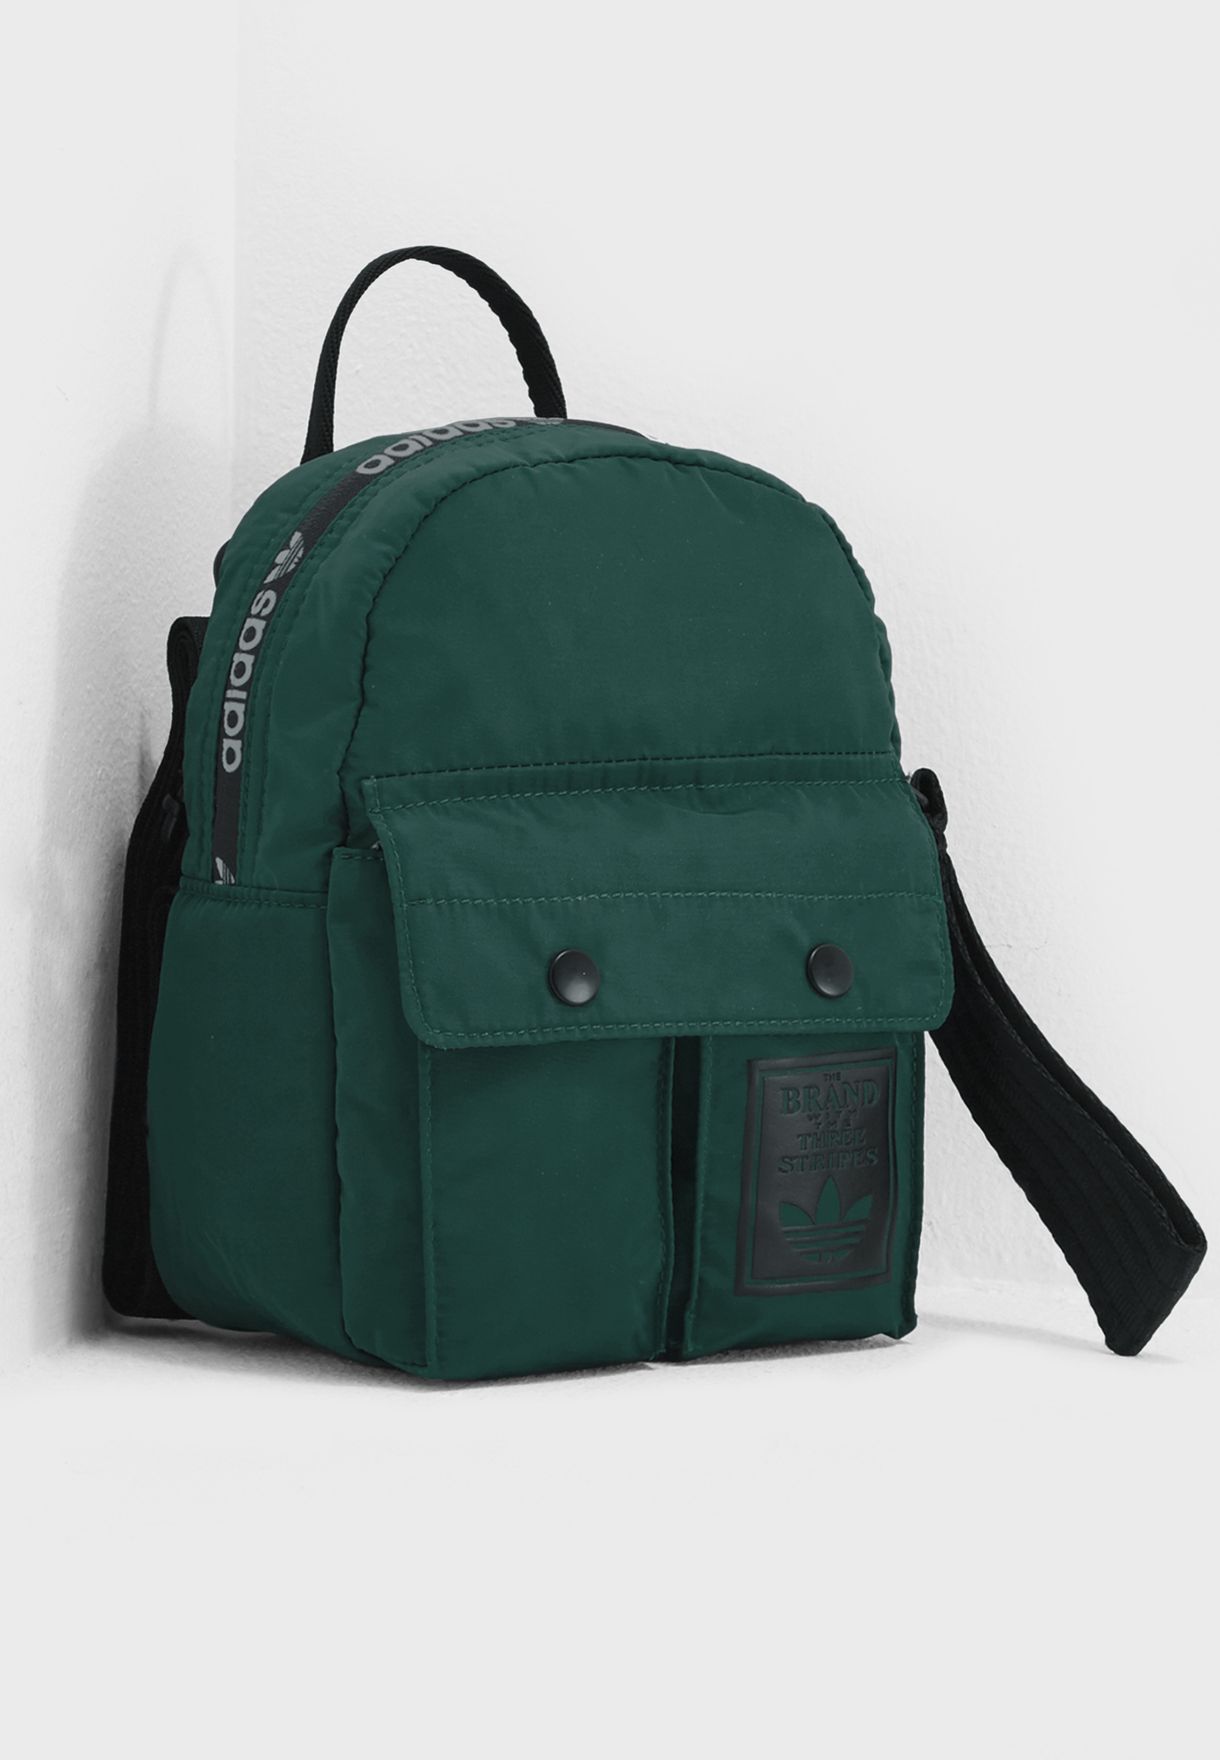 green adidas messenger bag